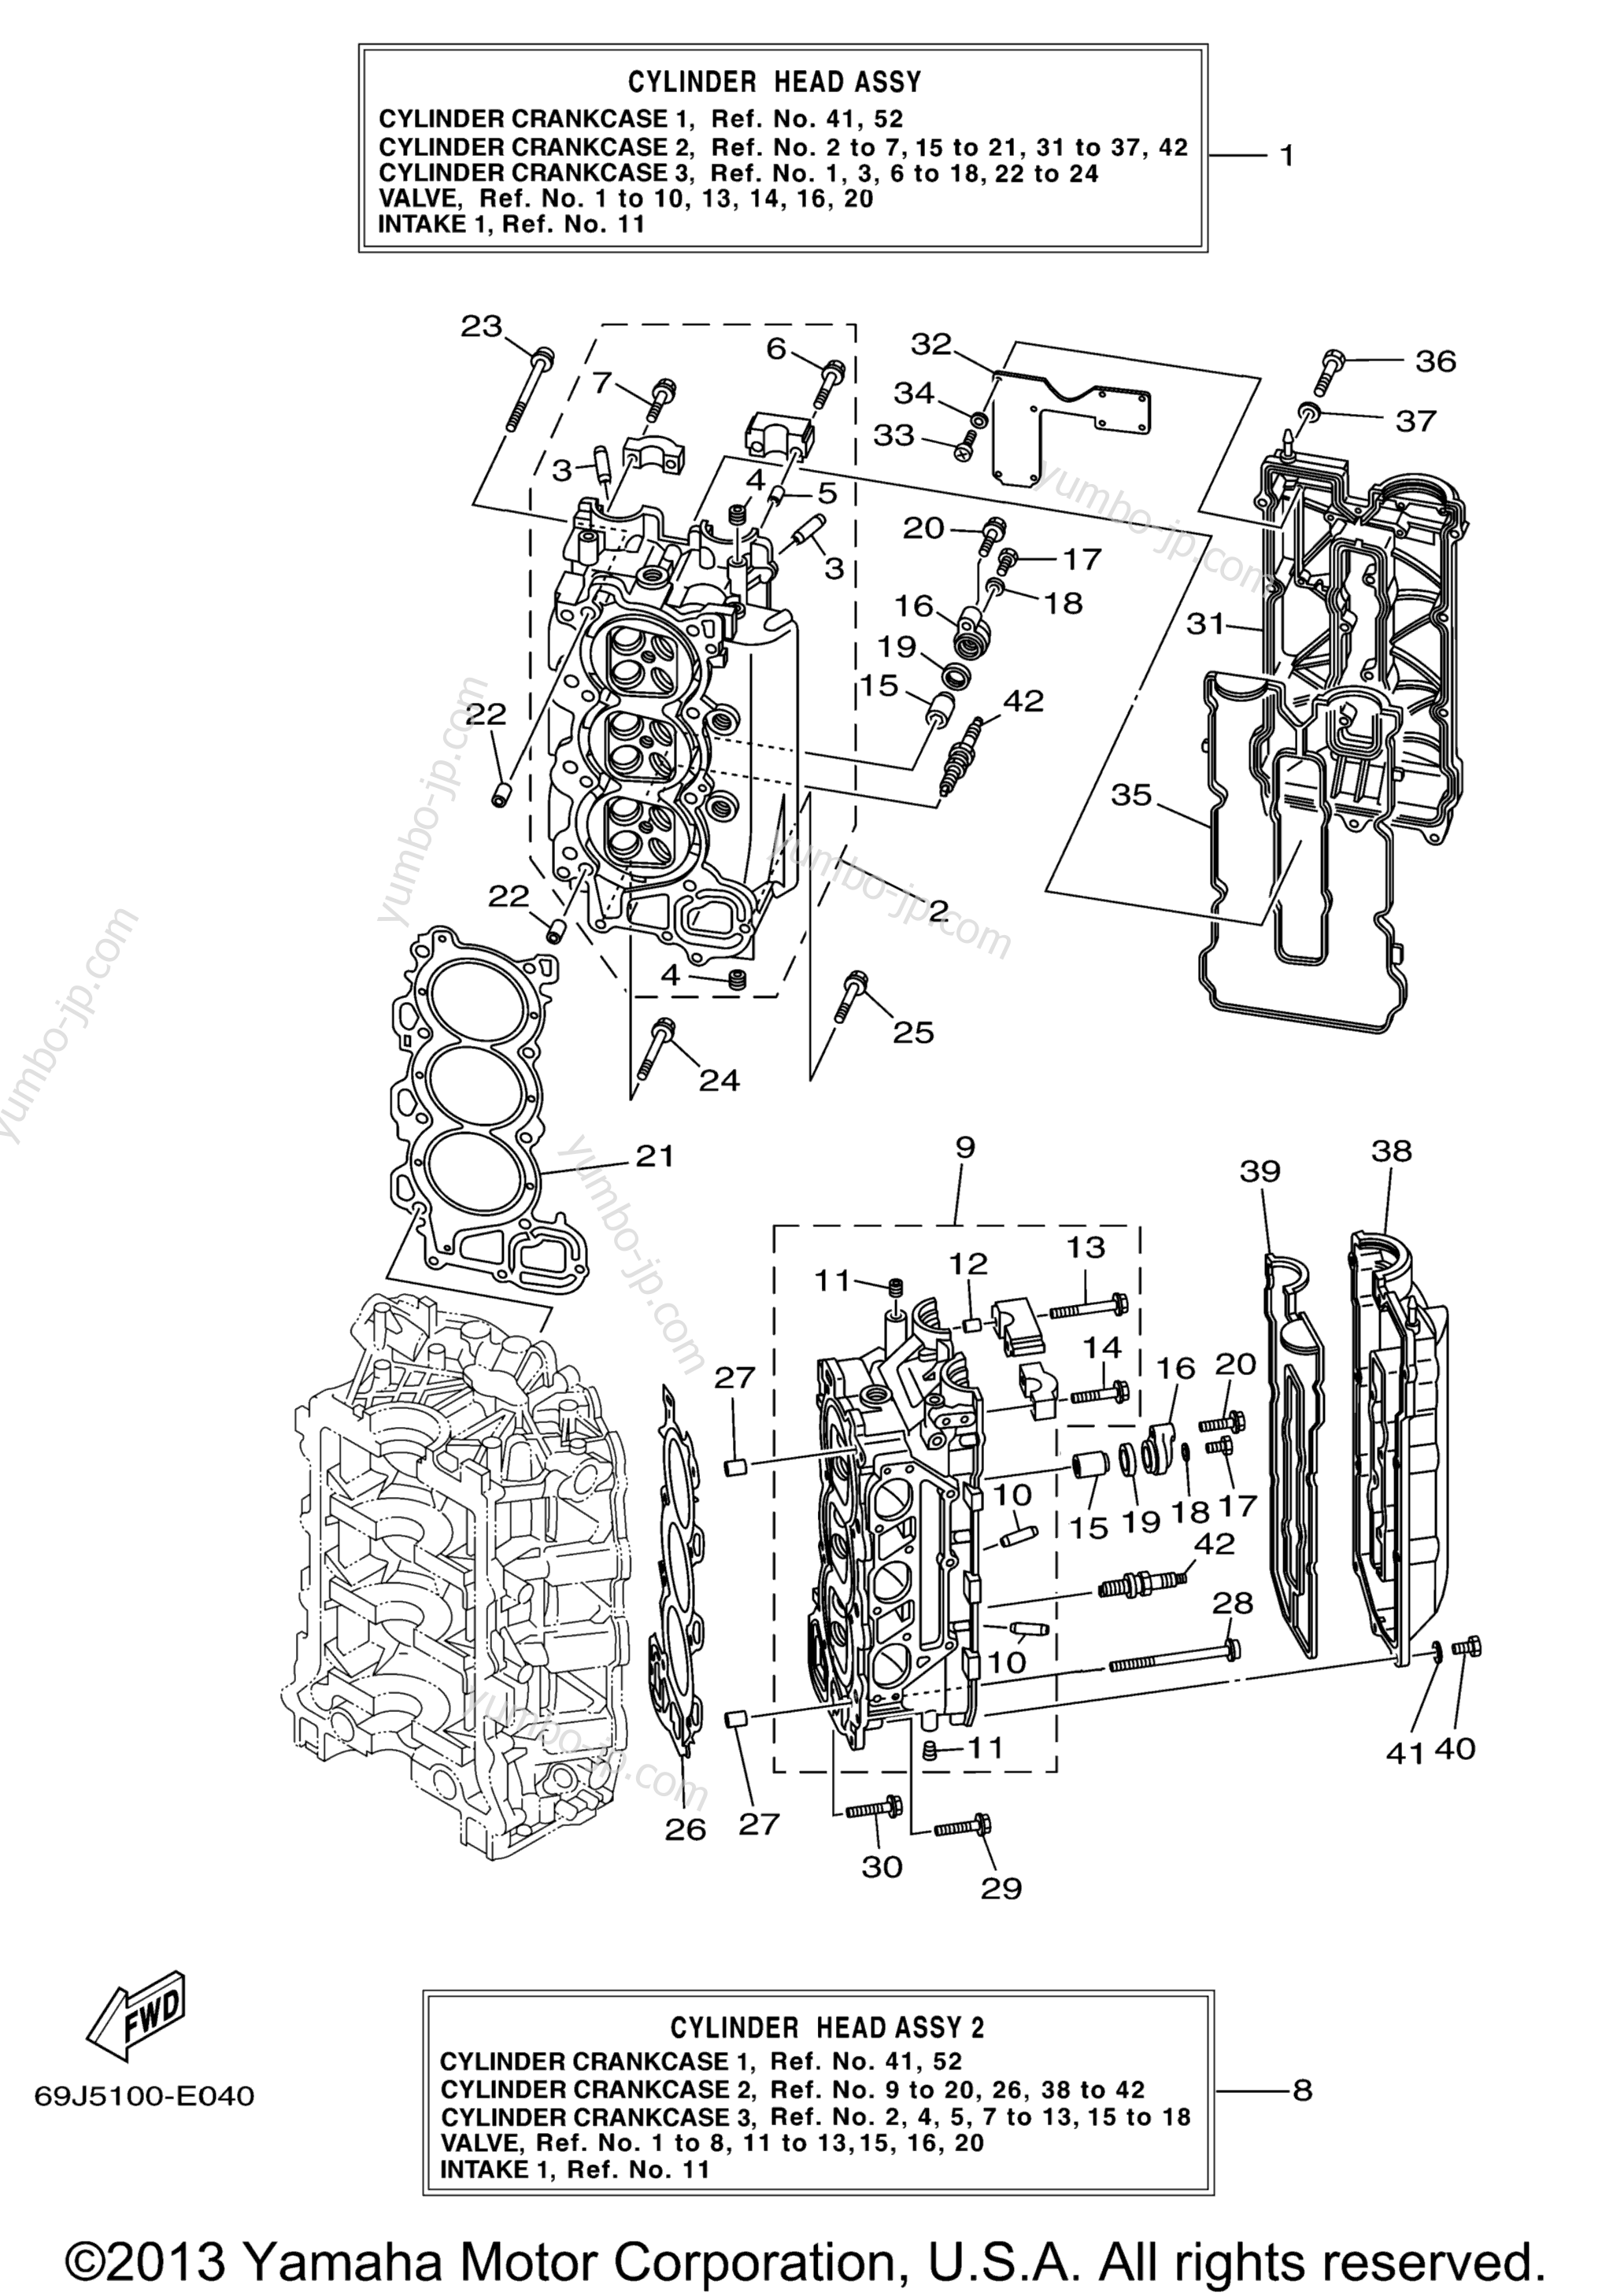 Cylinder Crankcase 2 для лодочных моторов YAMAHA LF200TXR (0405) 69J-1021983~1027874 LF225TXR_TUR 69K-1006907~10008 2006 г.